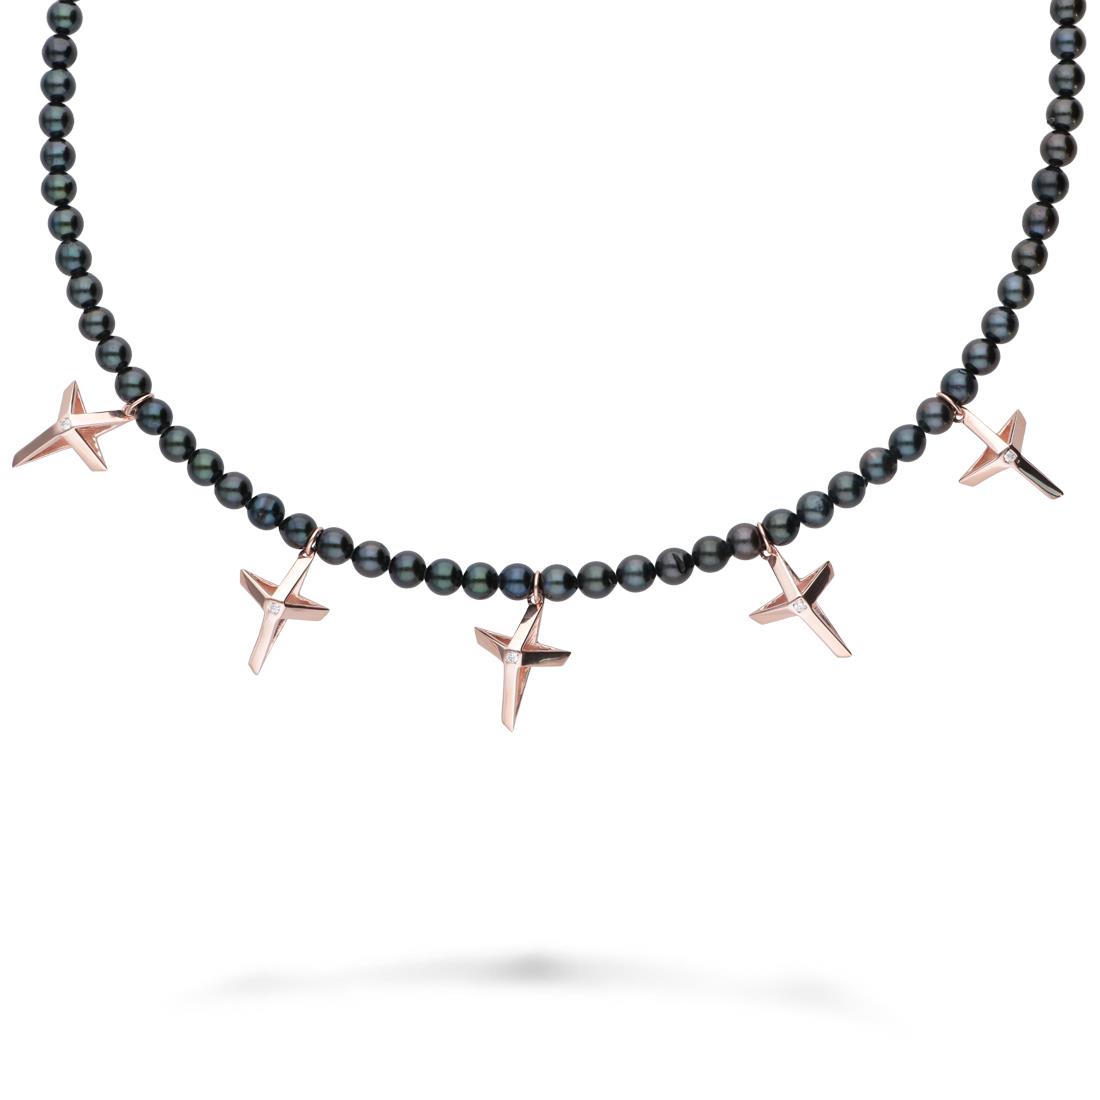 La Croce necklace in black pearls and crosses - ALFIERI & ST. JOHN